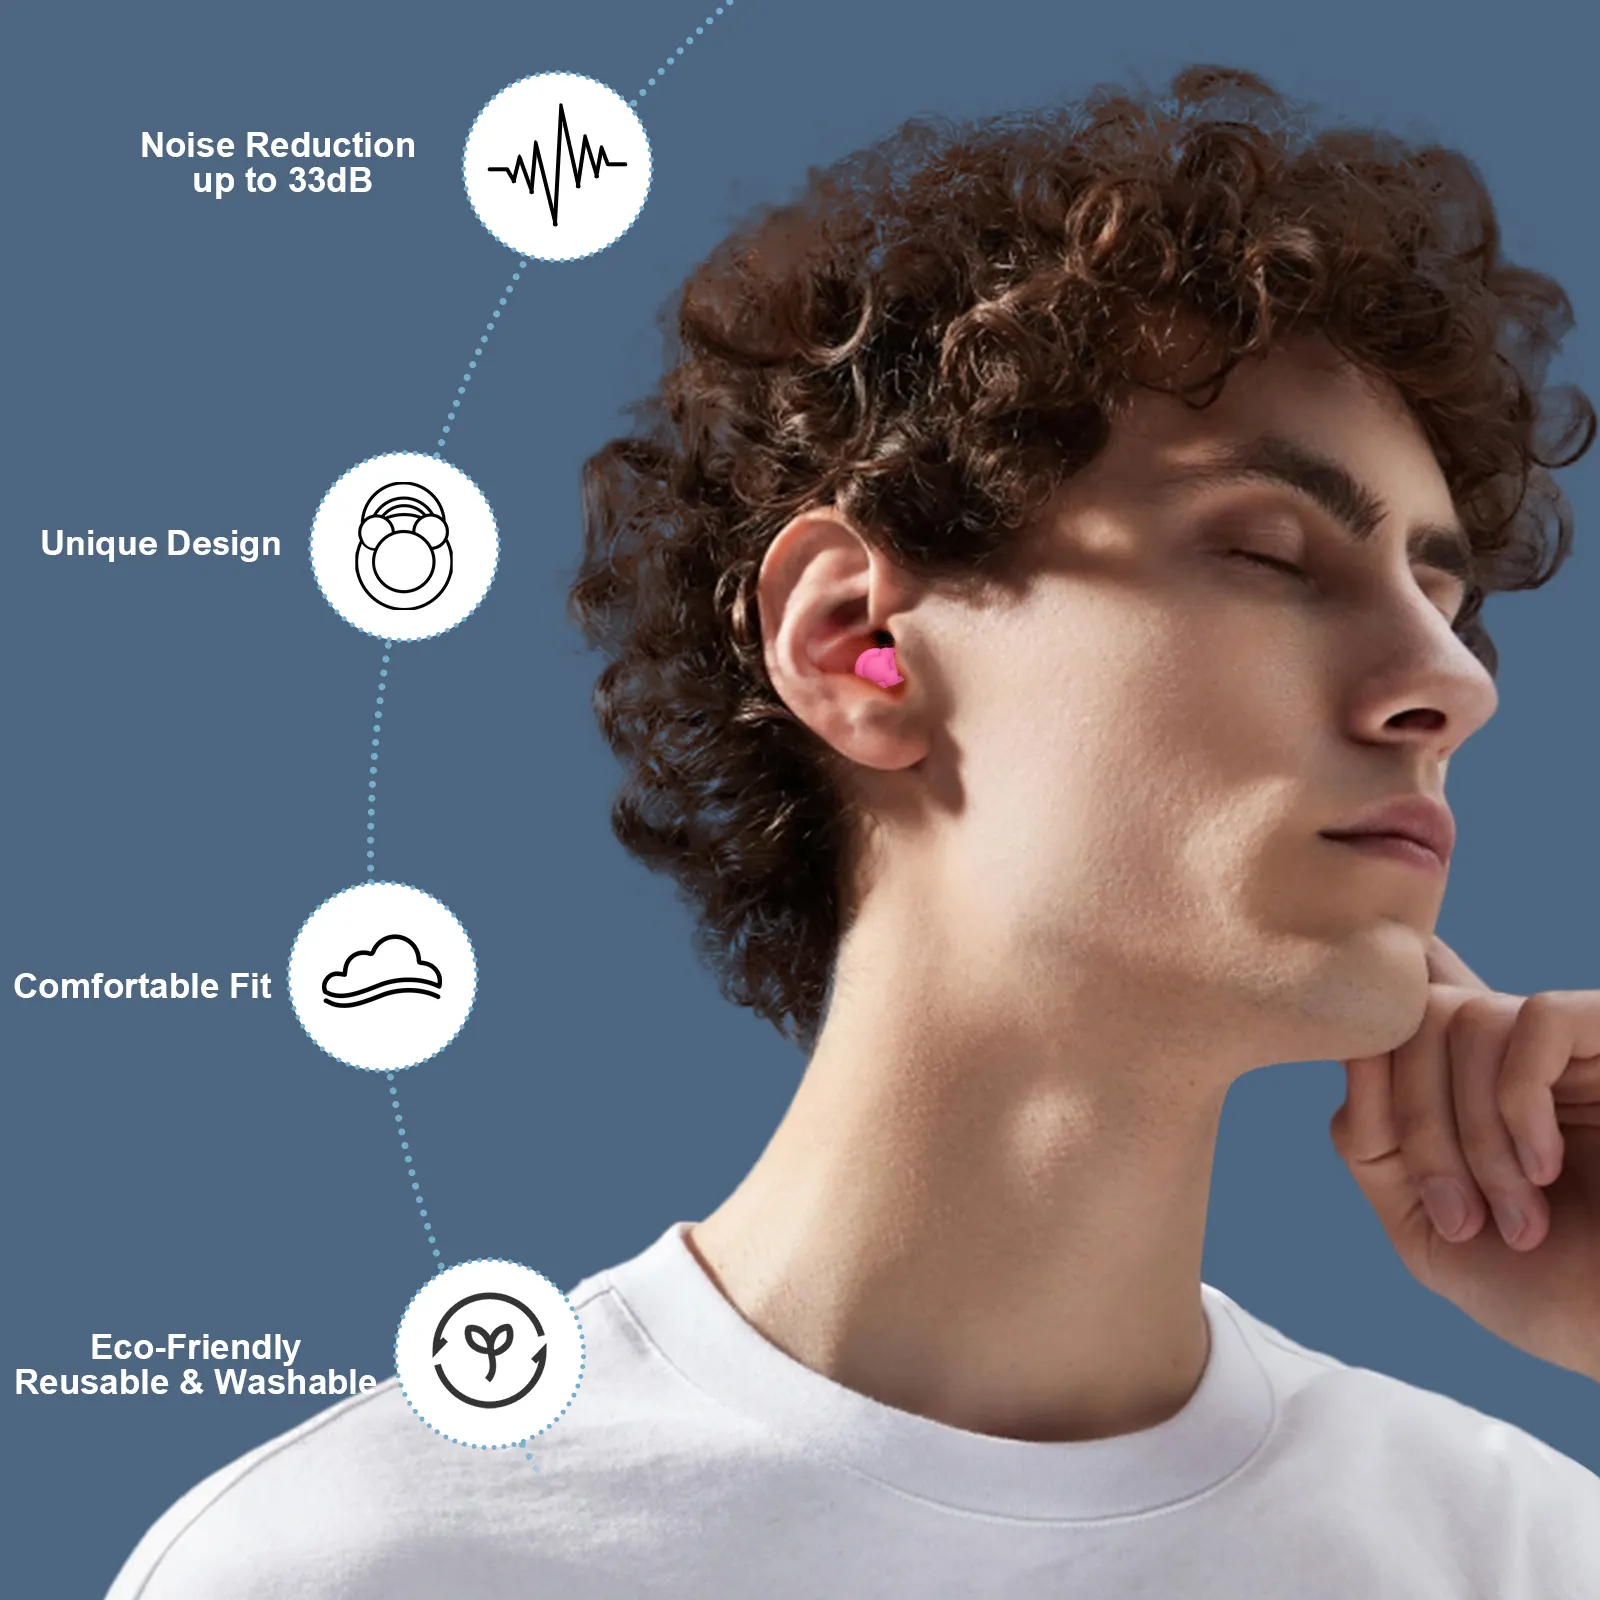 Karikatur-Stil Geräuschunterdrückung Ohrstöpsel Reduktion Silikon-Ohrstöpsel mit Hülle und Logo Hörschutz Ohrstöpsel zum Schlafen